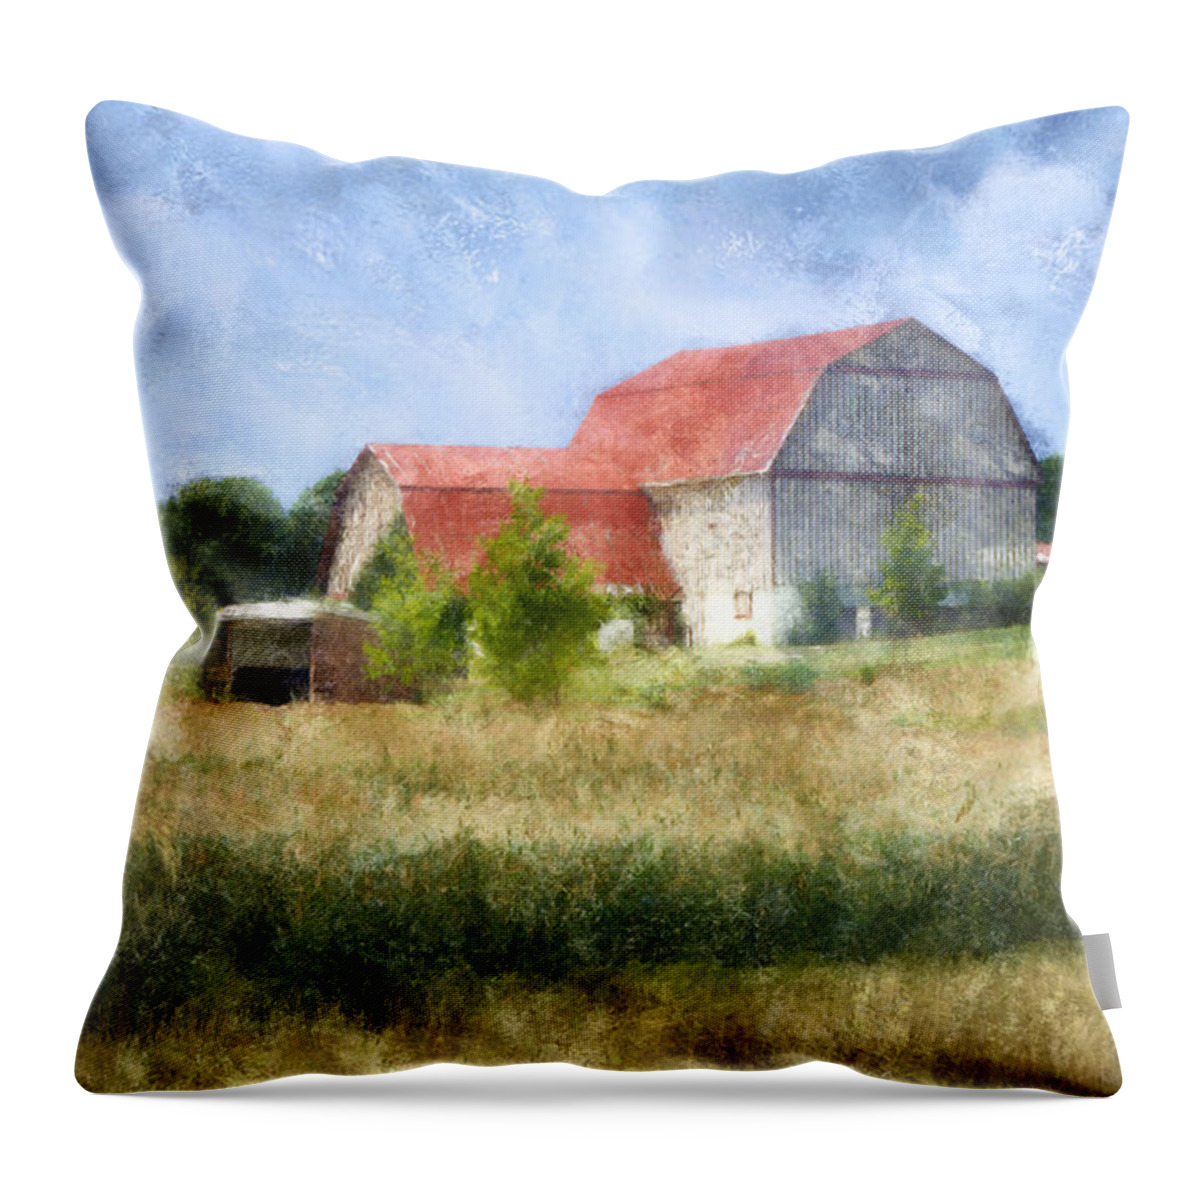 Barn Throw Pillow featuring the digital art Summer Barn by Frances Miller